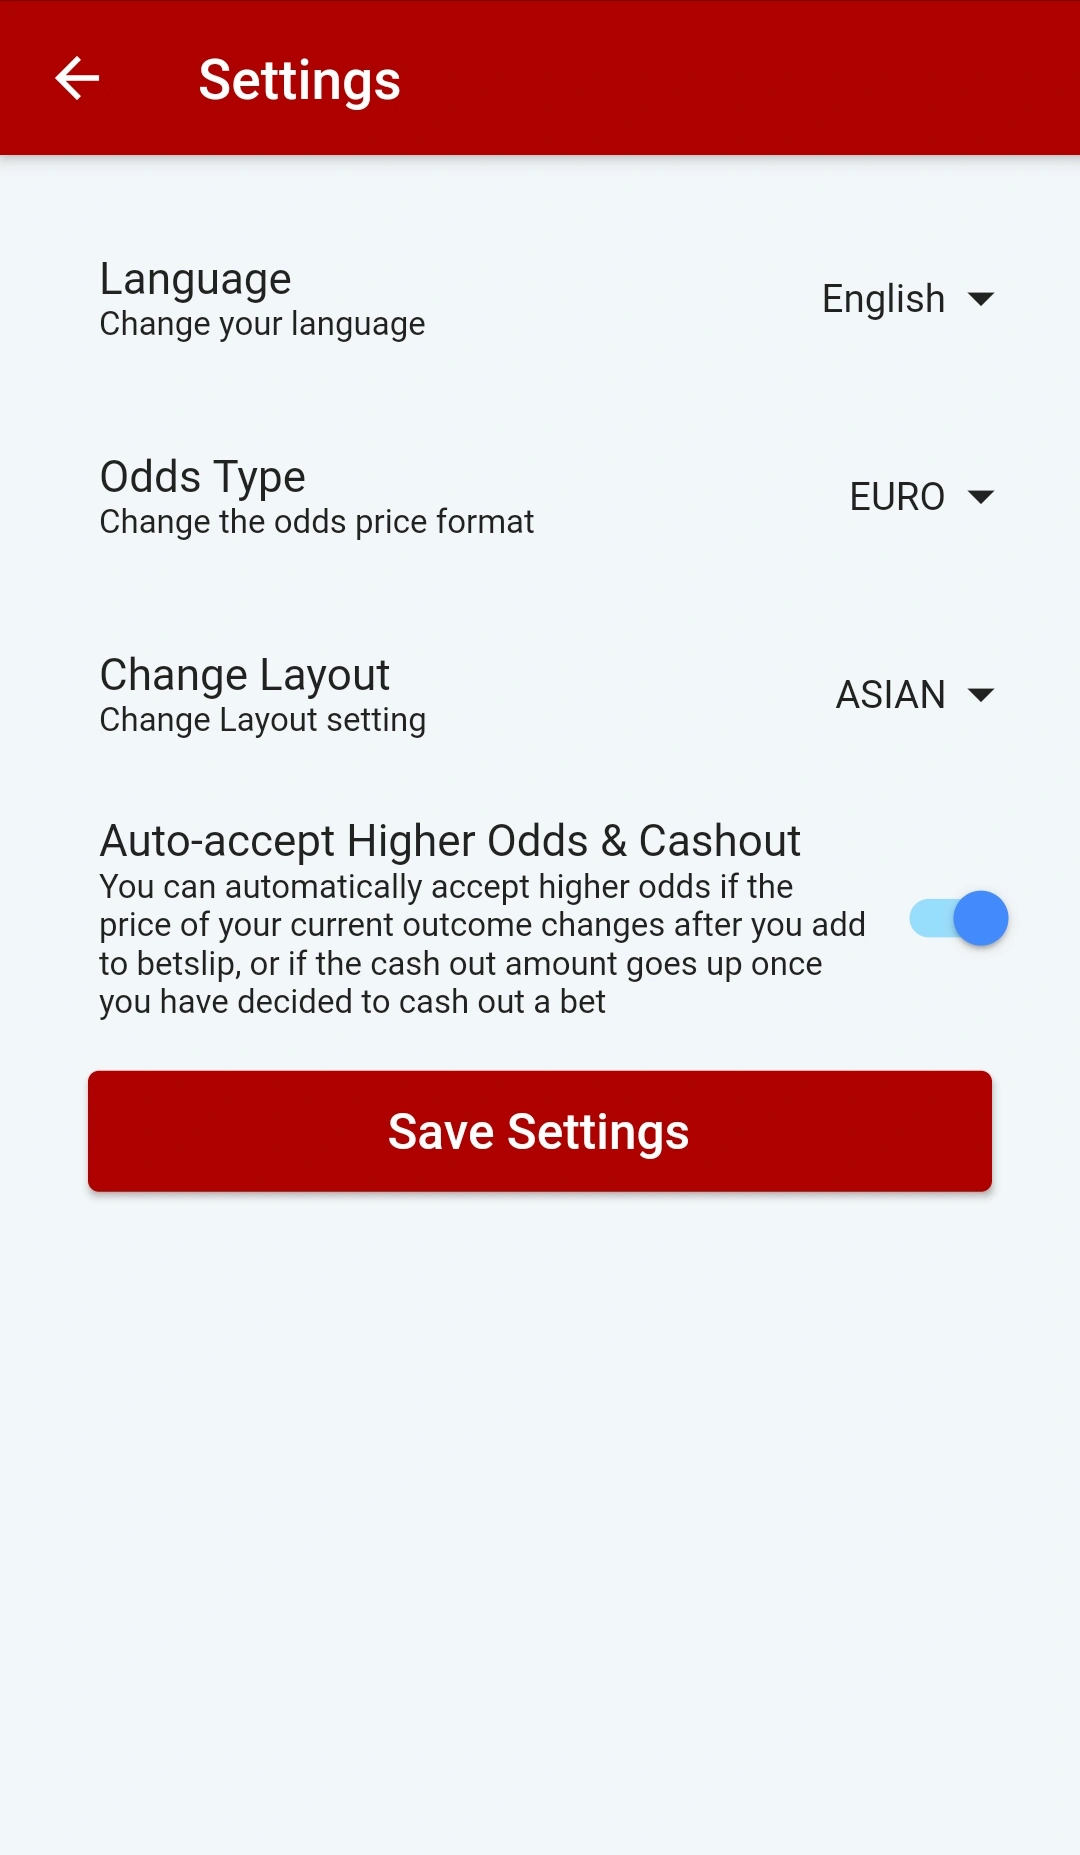 Global settings for the Dafabet app